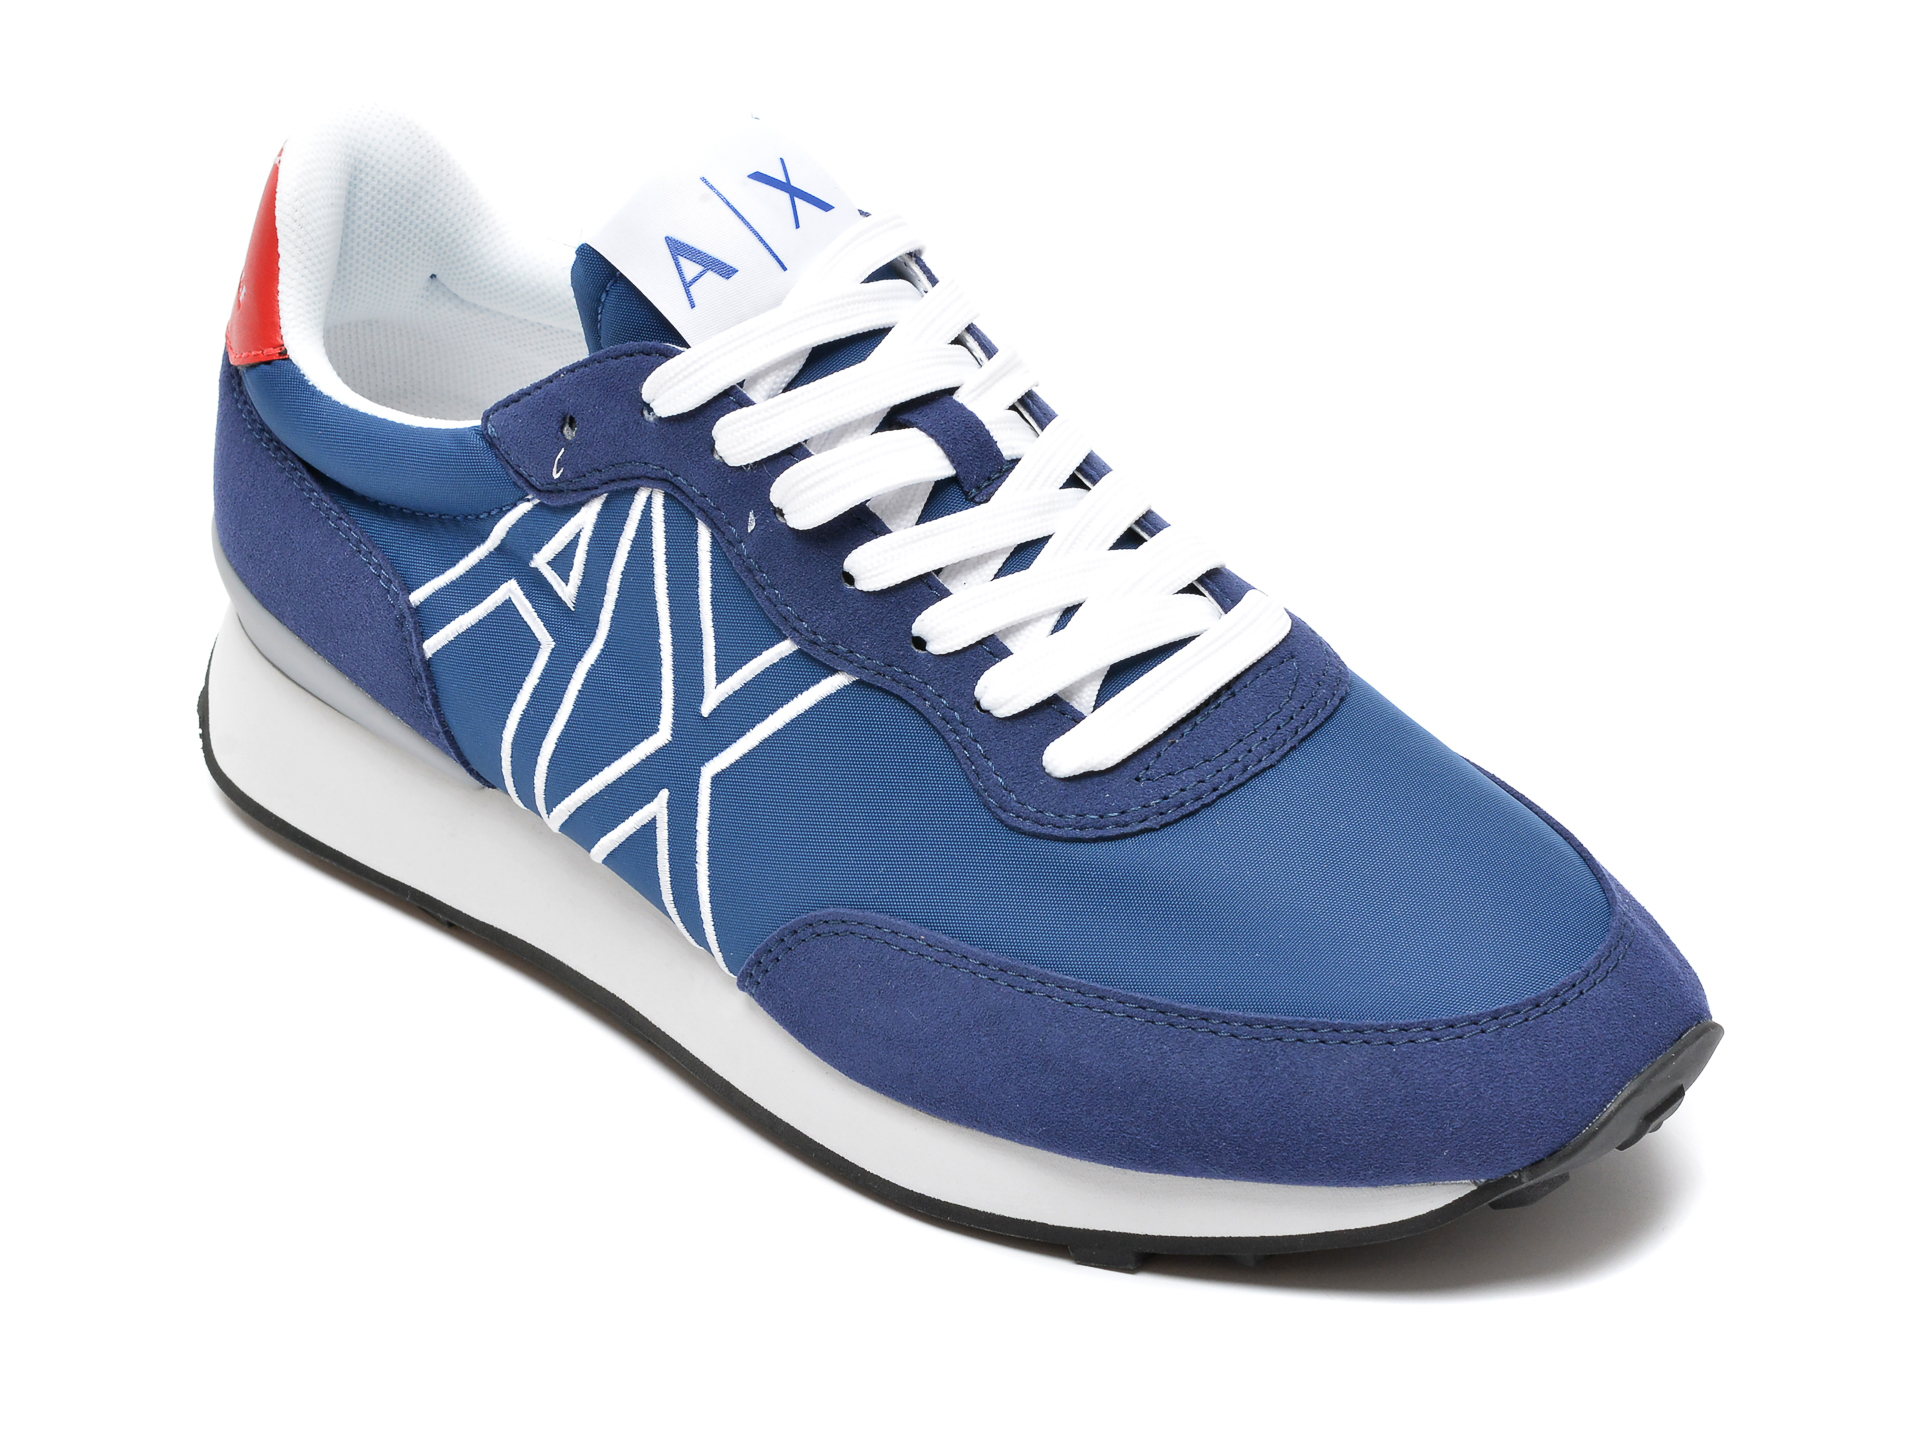 Pantofi sport ARMANI EXCHANGE albastri, XUX129, din material textil si piele ecologica Armani Exchange